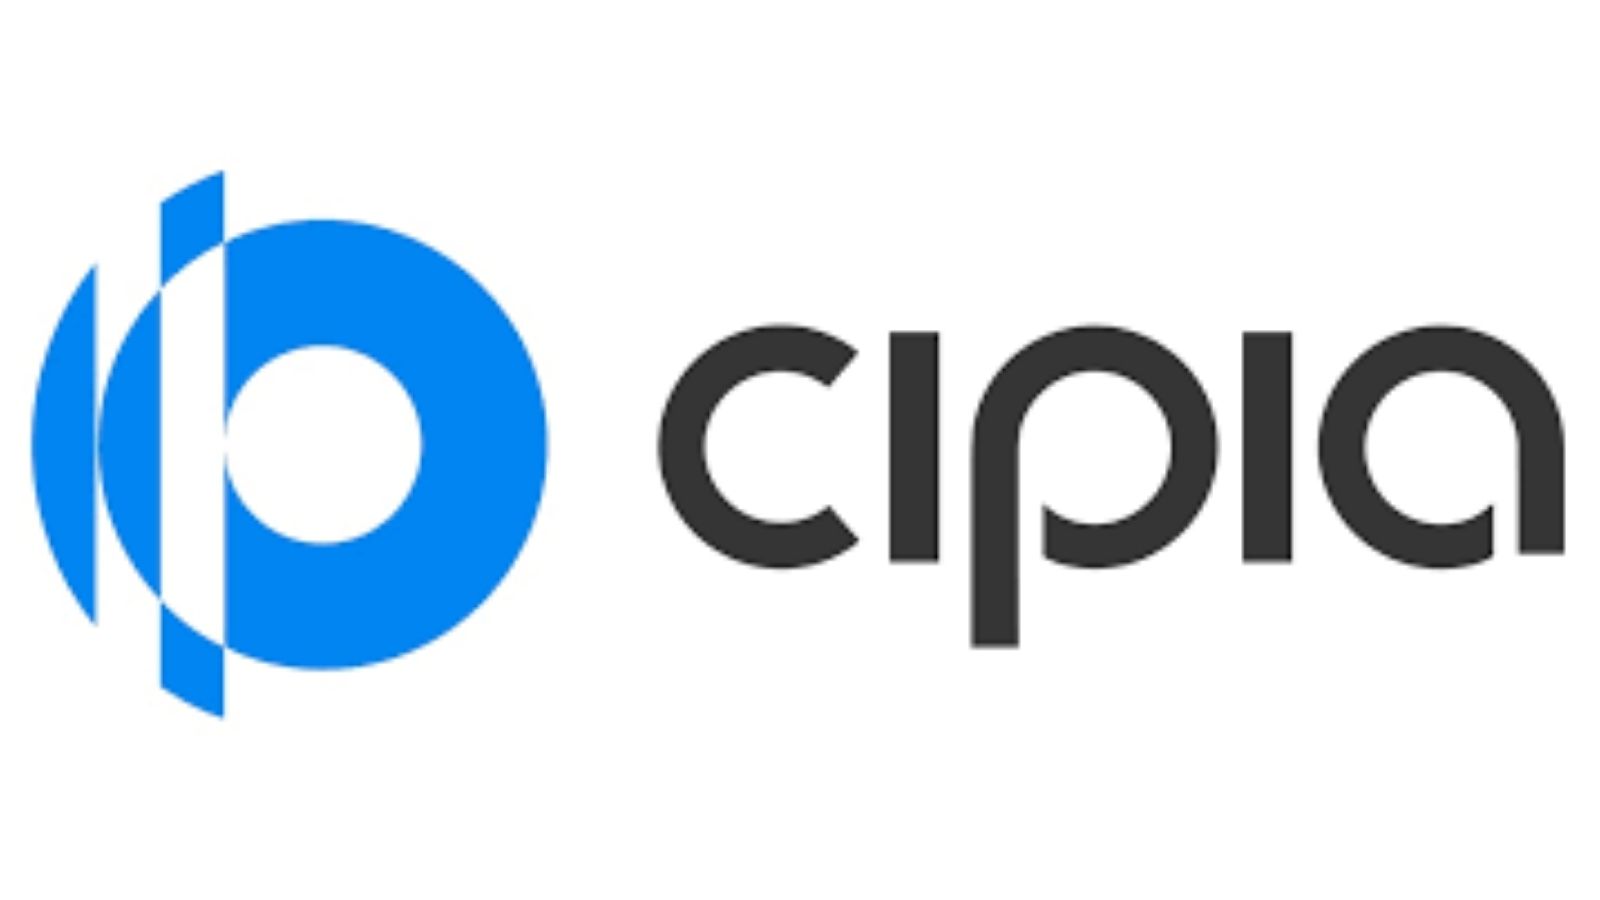 Cipia Vision,一家领先的智能感知解决方案企业